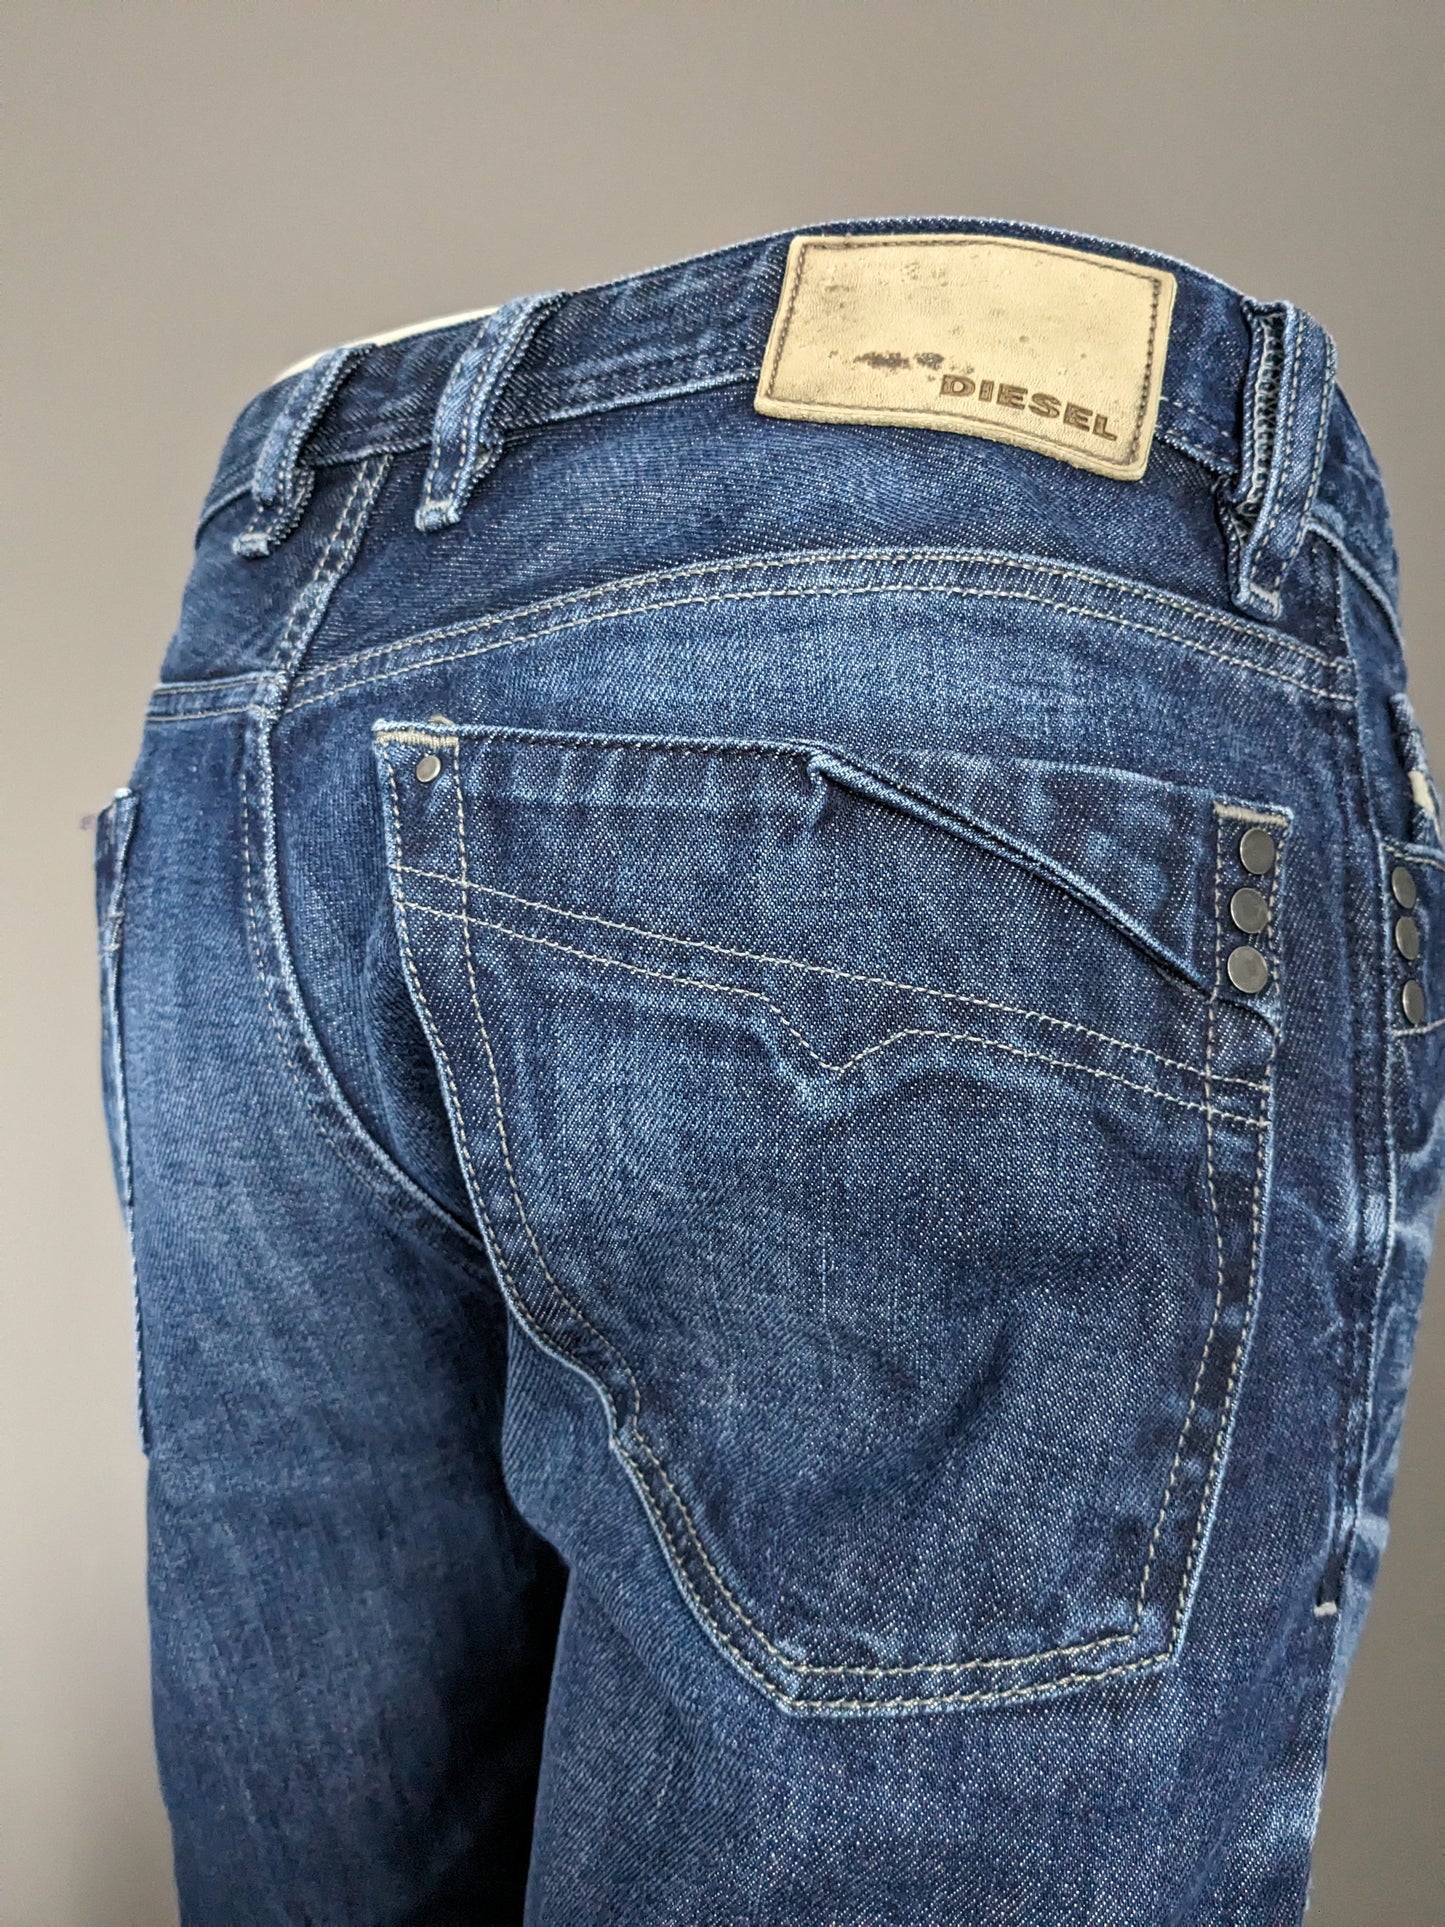 Diesel jeans. Dark blue colored. Size W31 - L32. Type "Mennit".